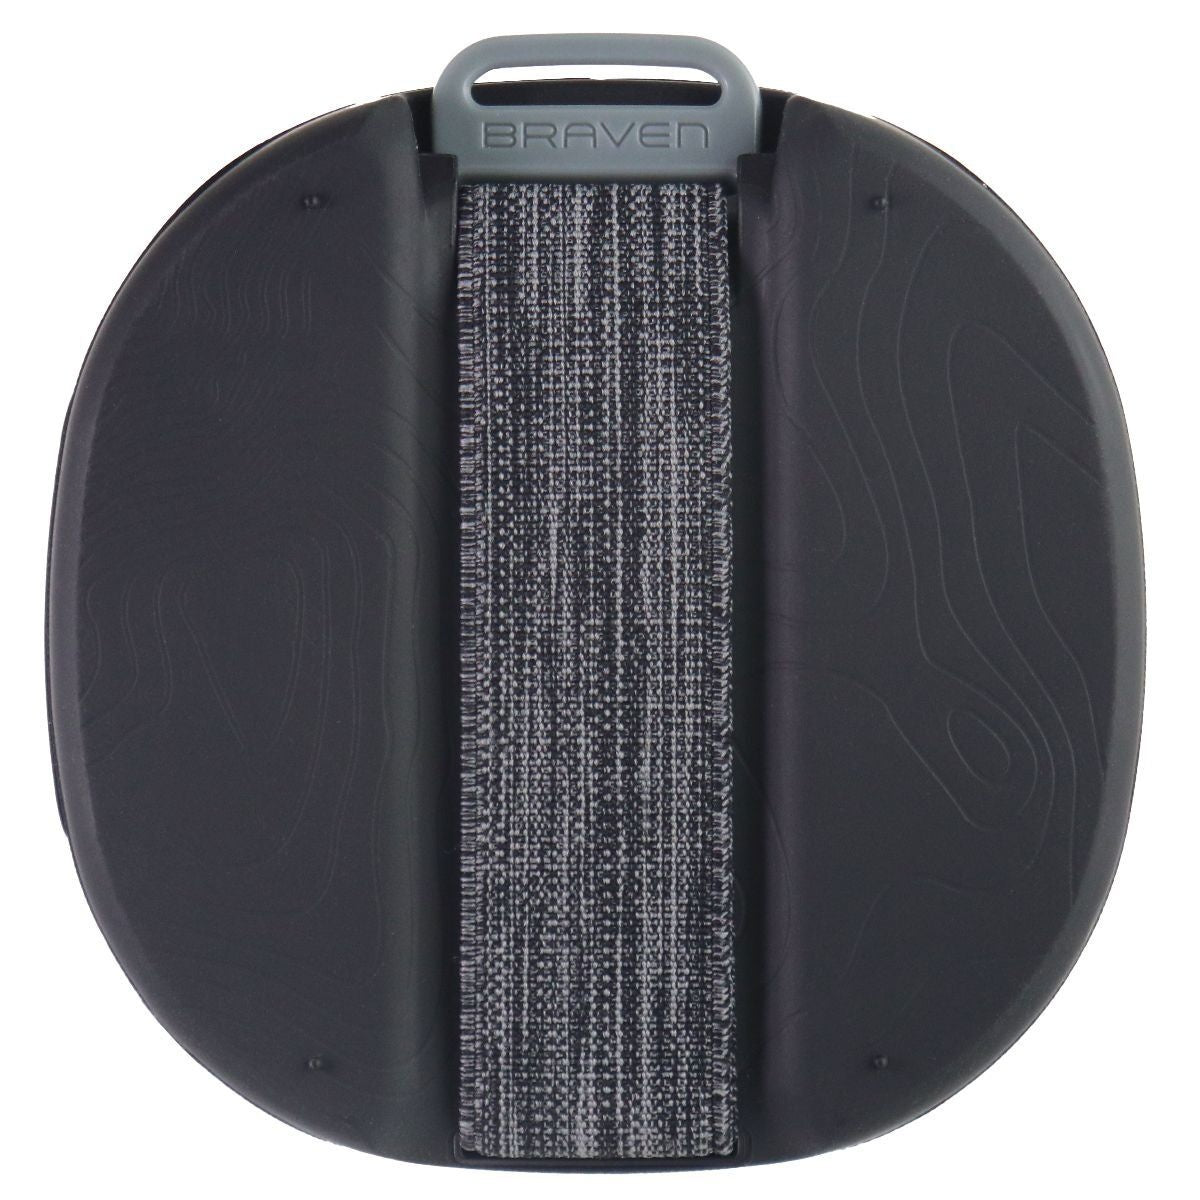 Braven Tap-In BRV-S Rugged Portable Bluetooth Speaker - Black Cell Phone - Audio Docks & Speakers Braven    - Simple Cell Bulk Wholesale Pricing - USA Seller